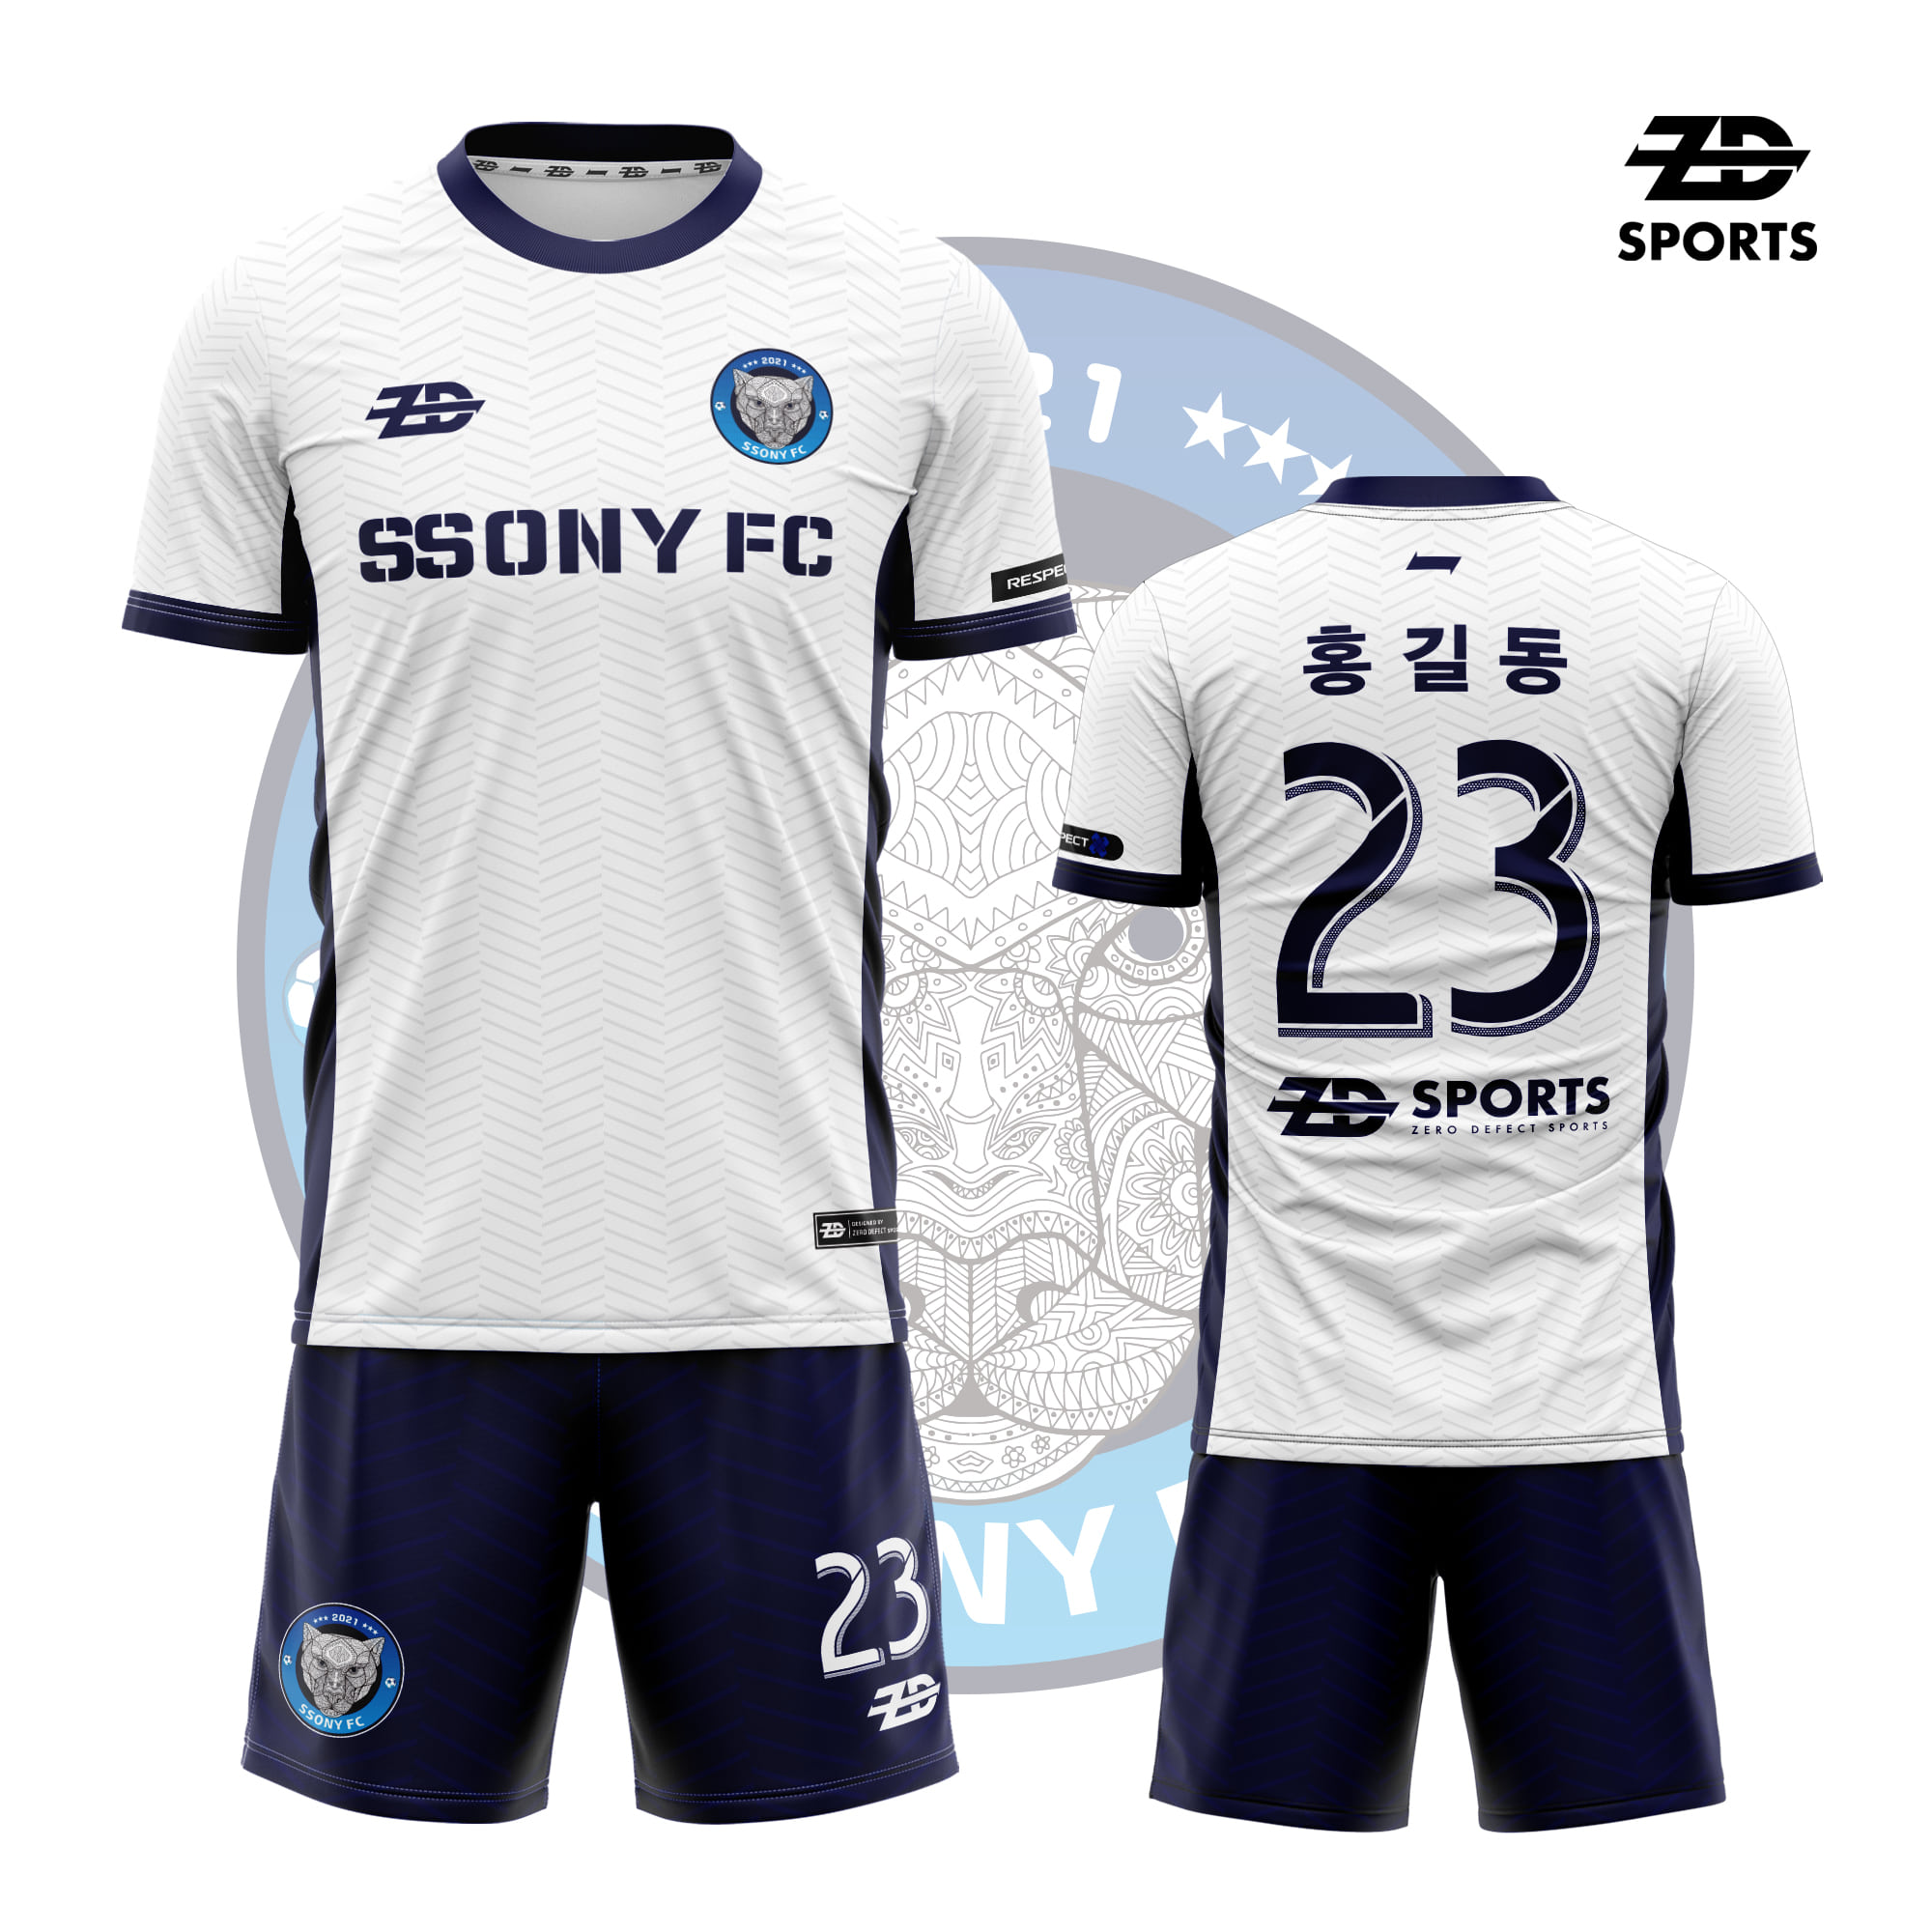 ZD 쏘니FC(어웨이-WH) 유니폼